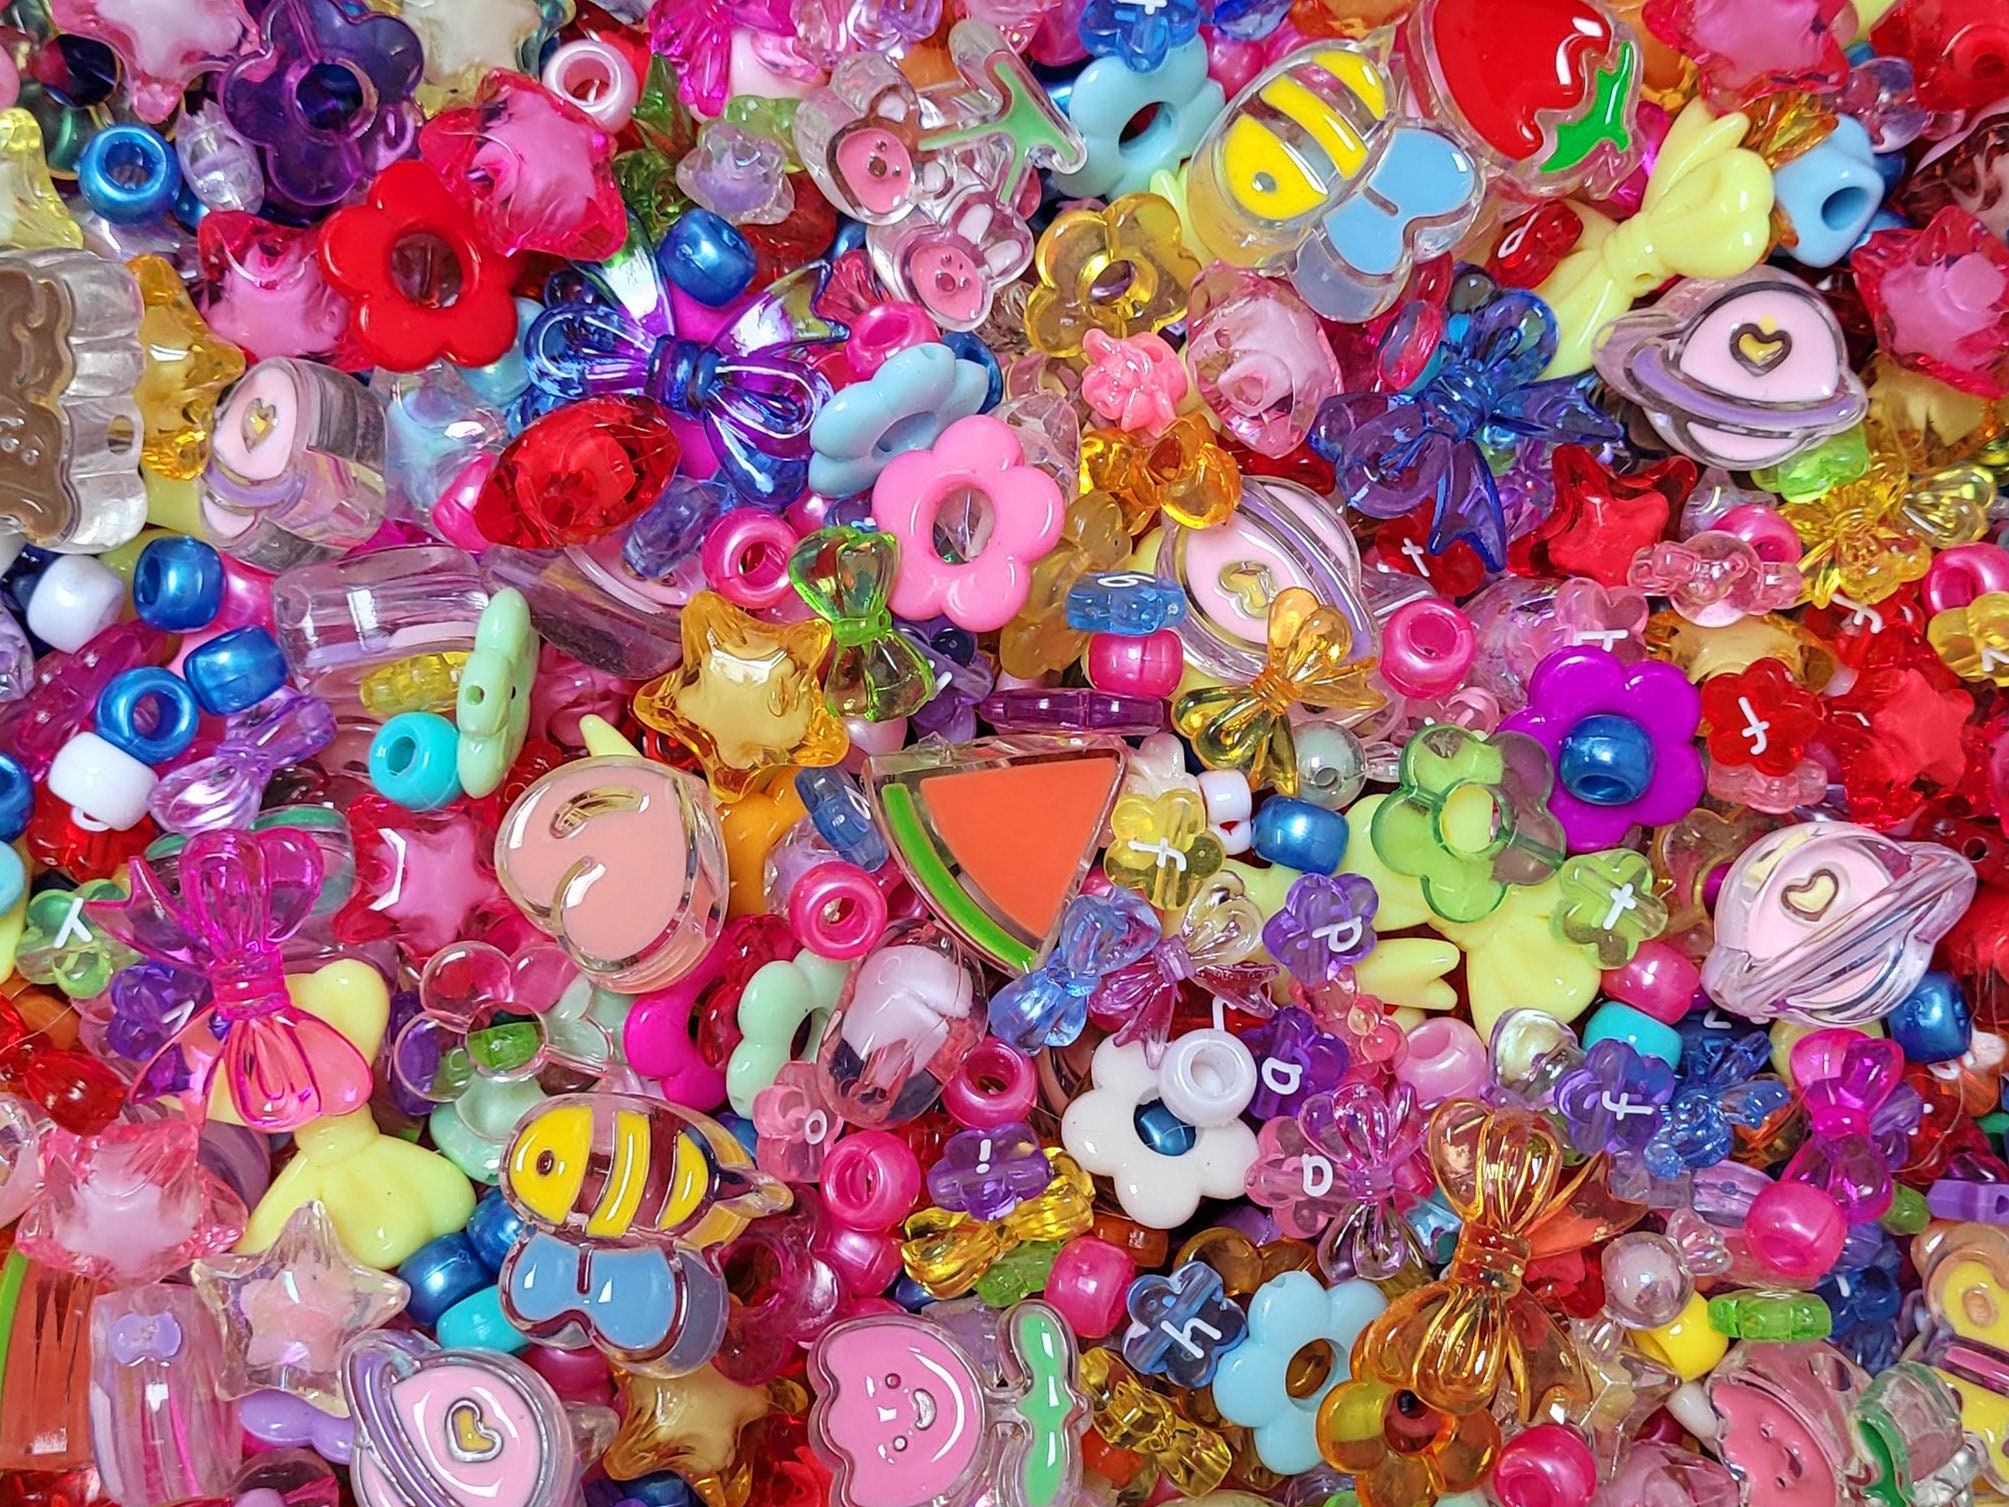 Lot Of 500 pcs 5mm UFO Pastel Beads DIY Toys Kids Crafts Jewelry